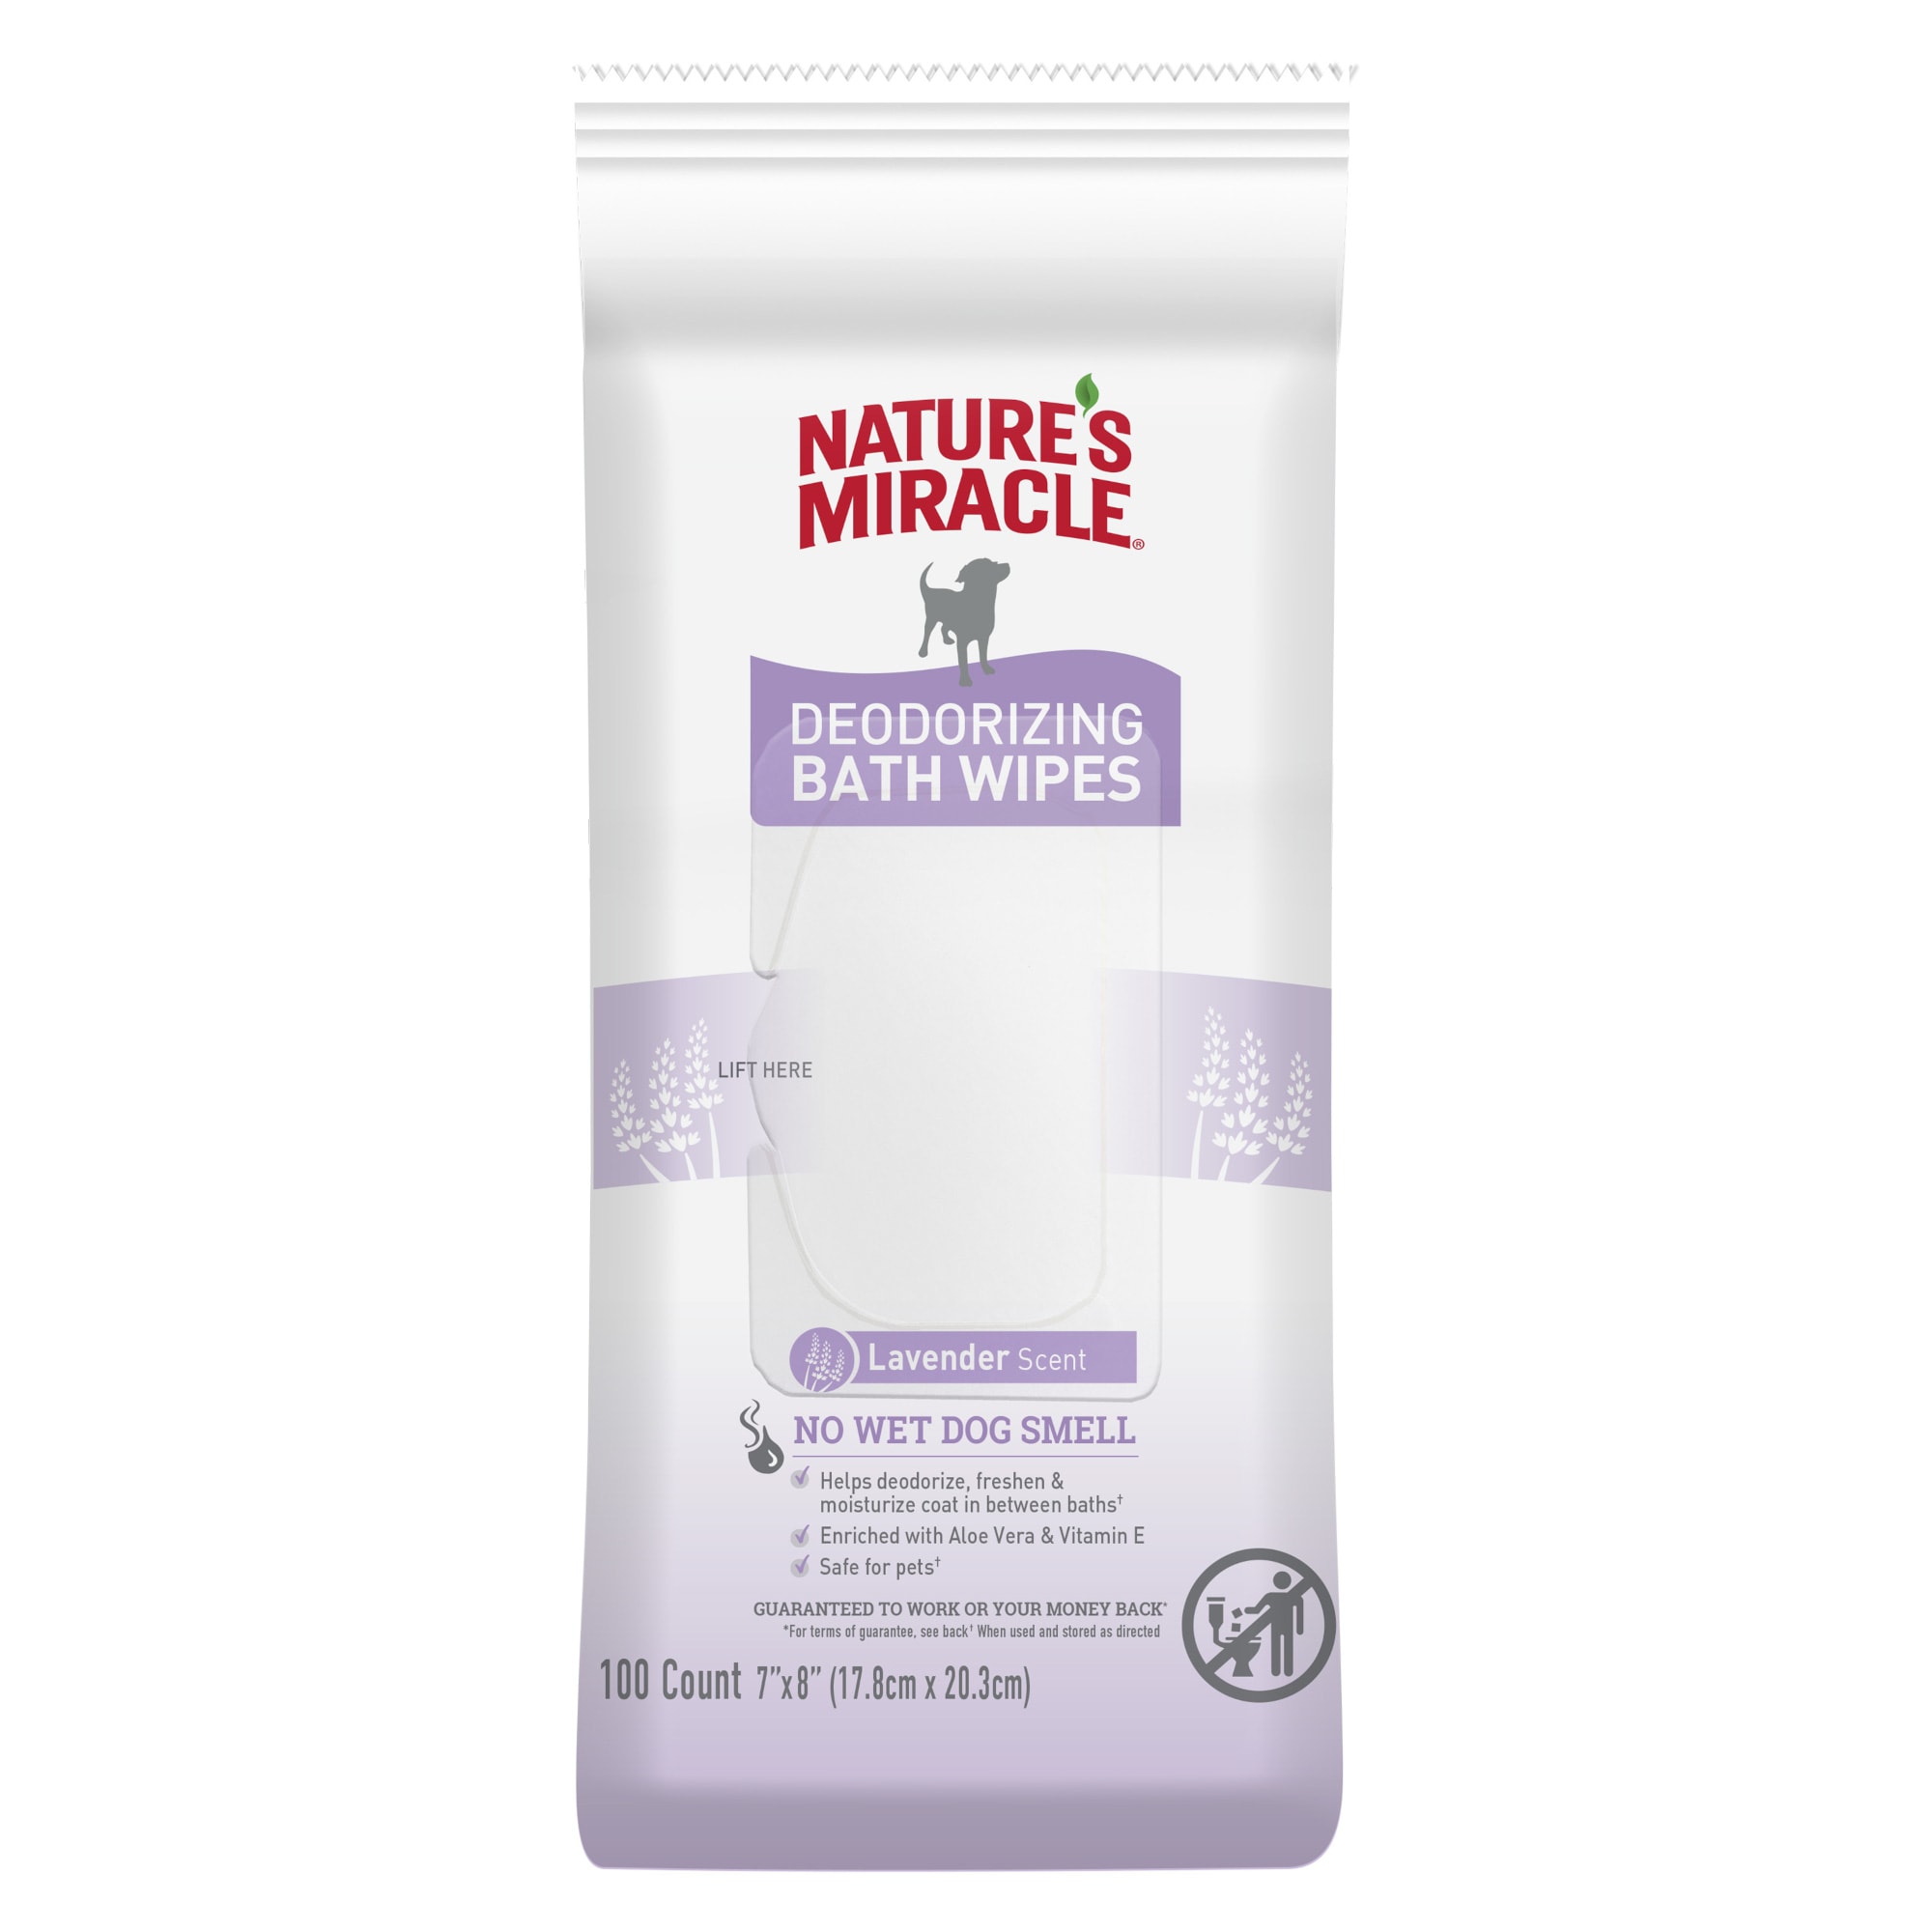 Nature's Miracle Deodorizing Bath Wipes - Honey Sage - 100 Count